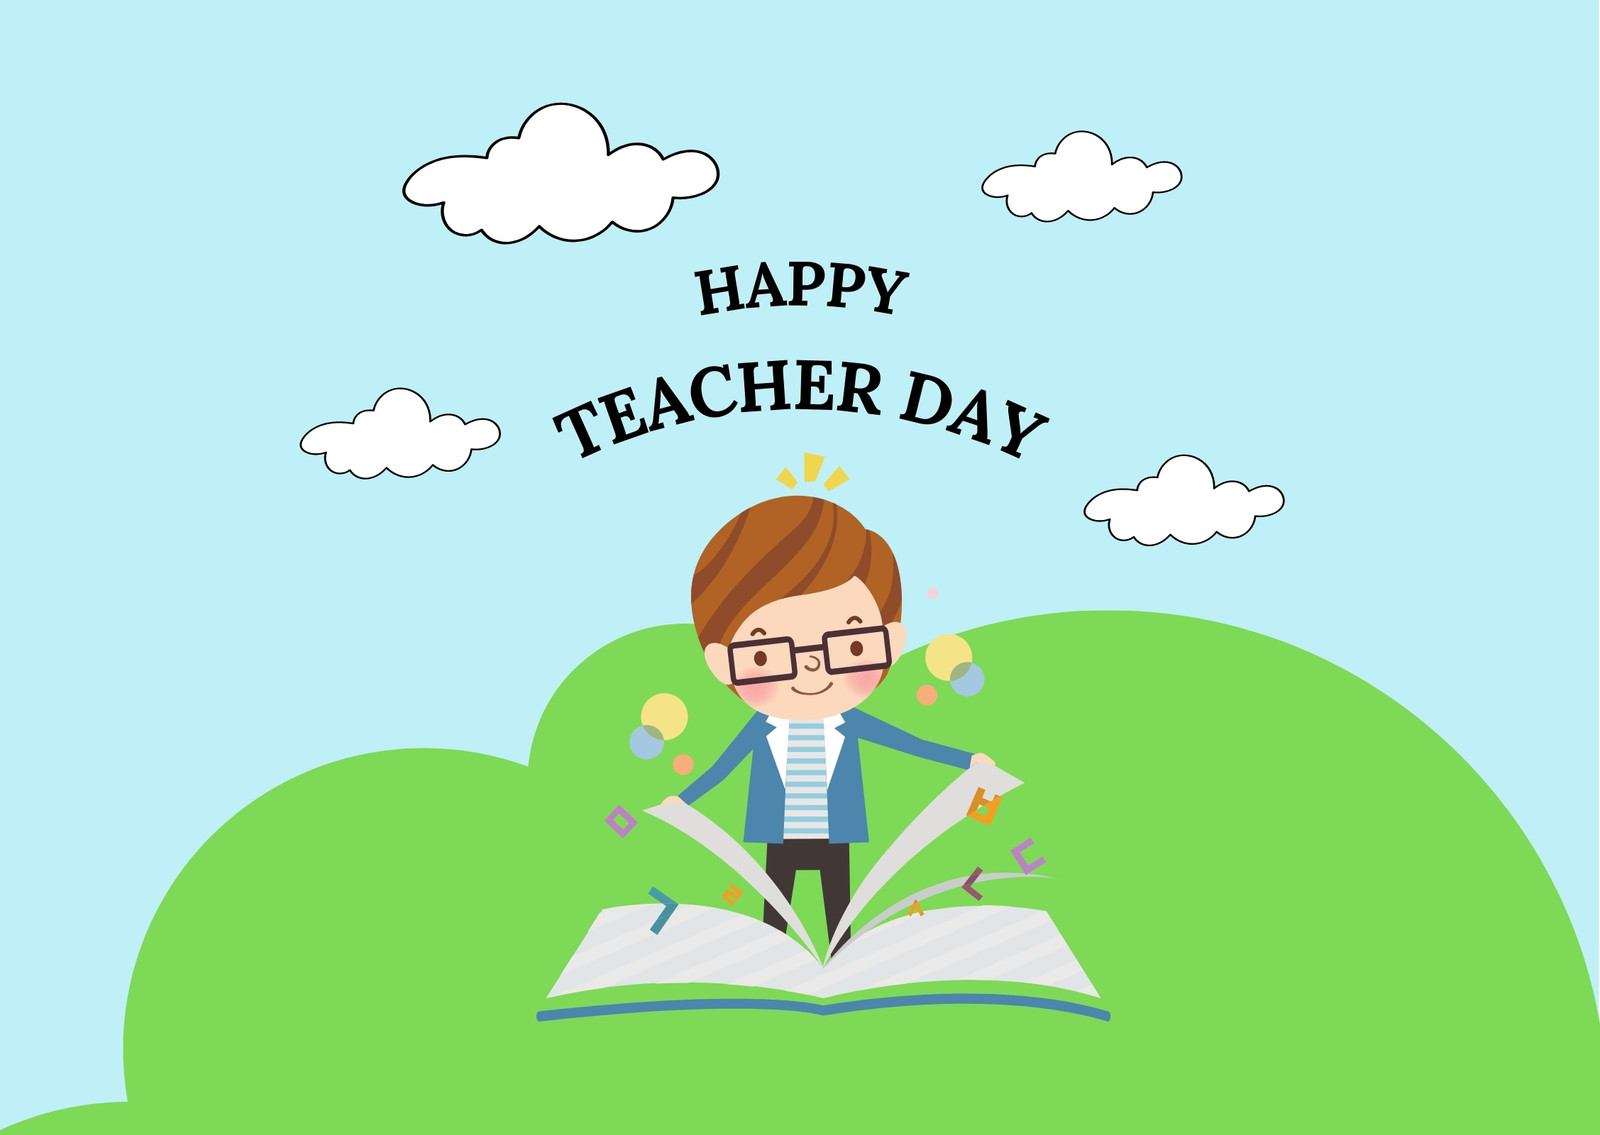 teachers-day-kasha-moyer